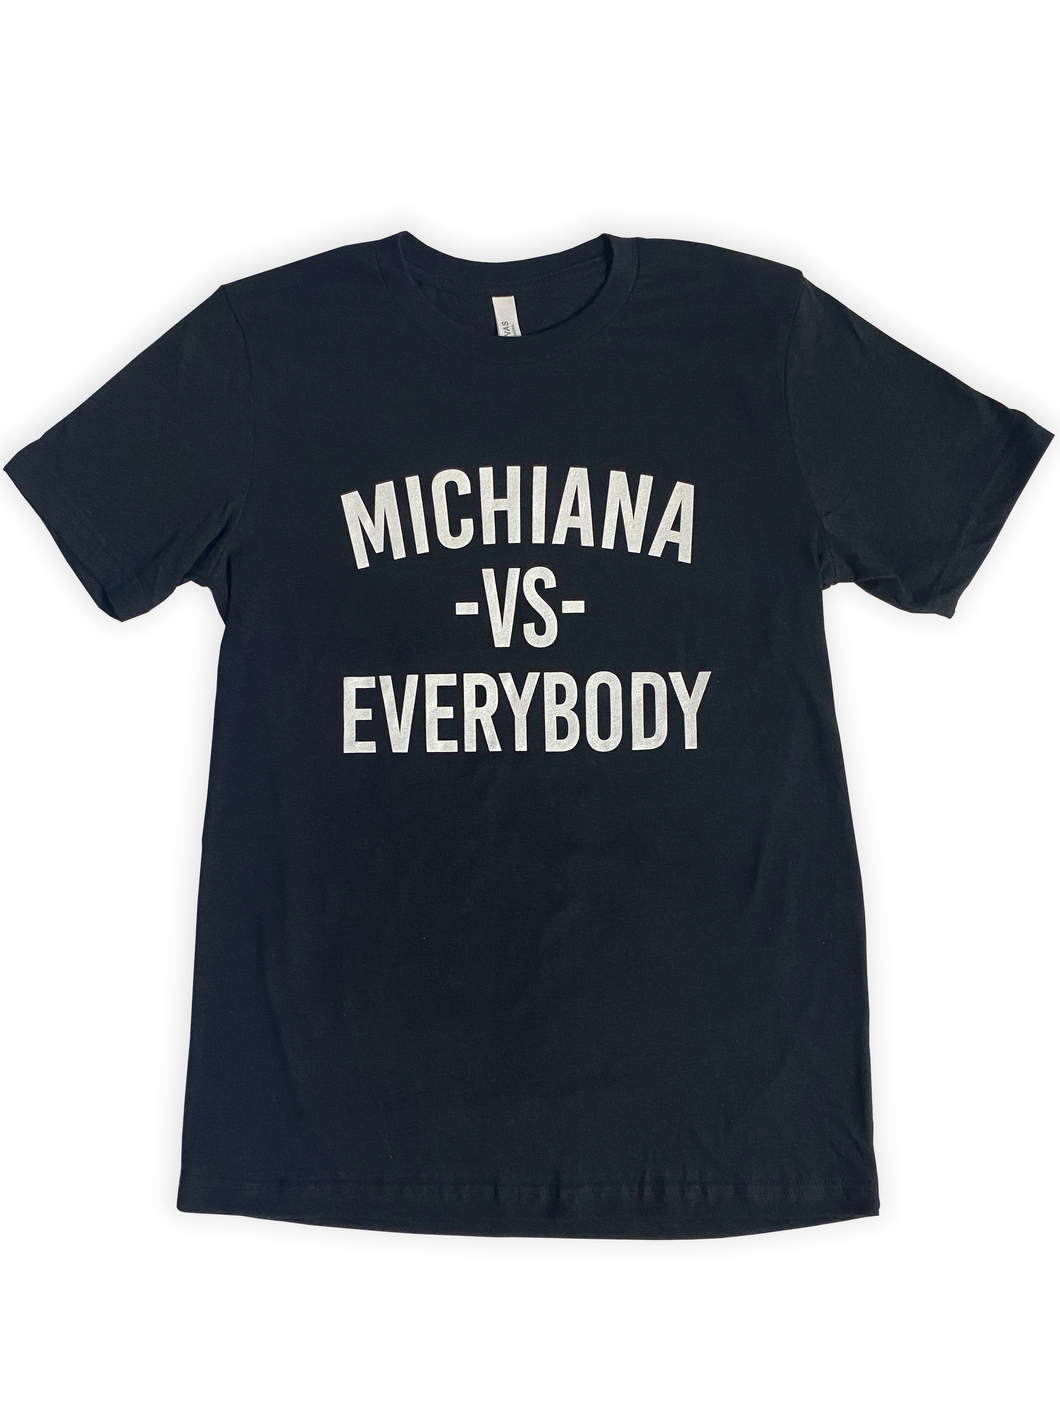 michiana vs everybody tshirt